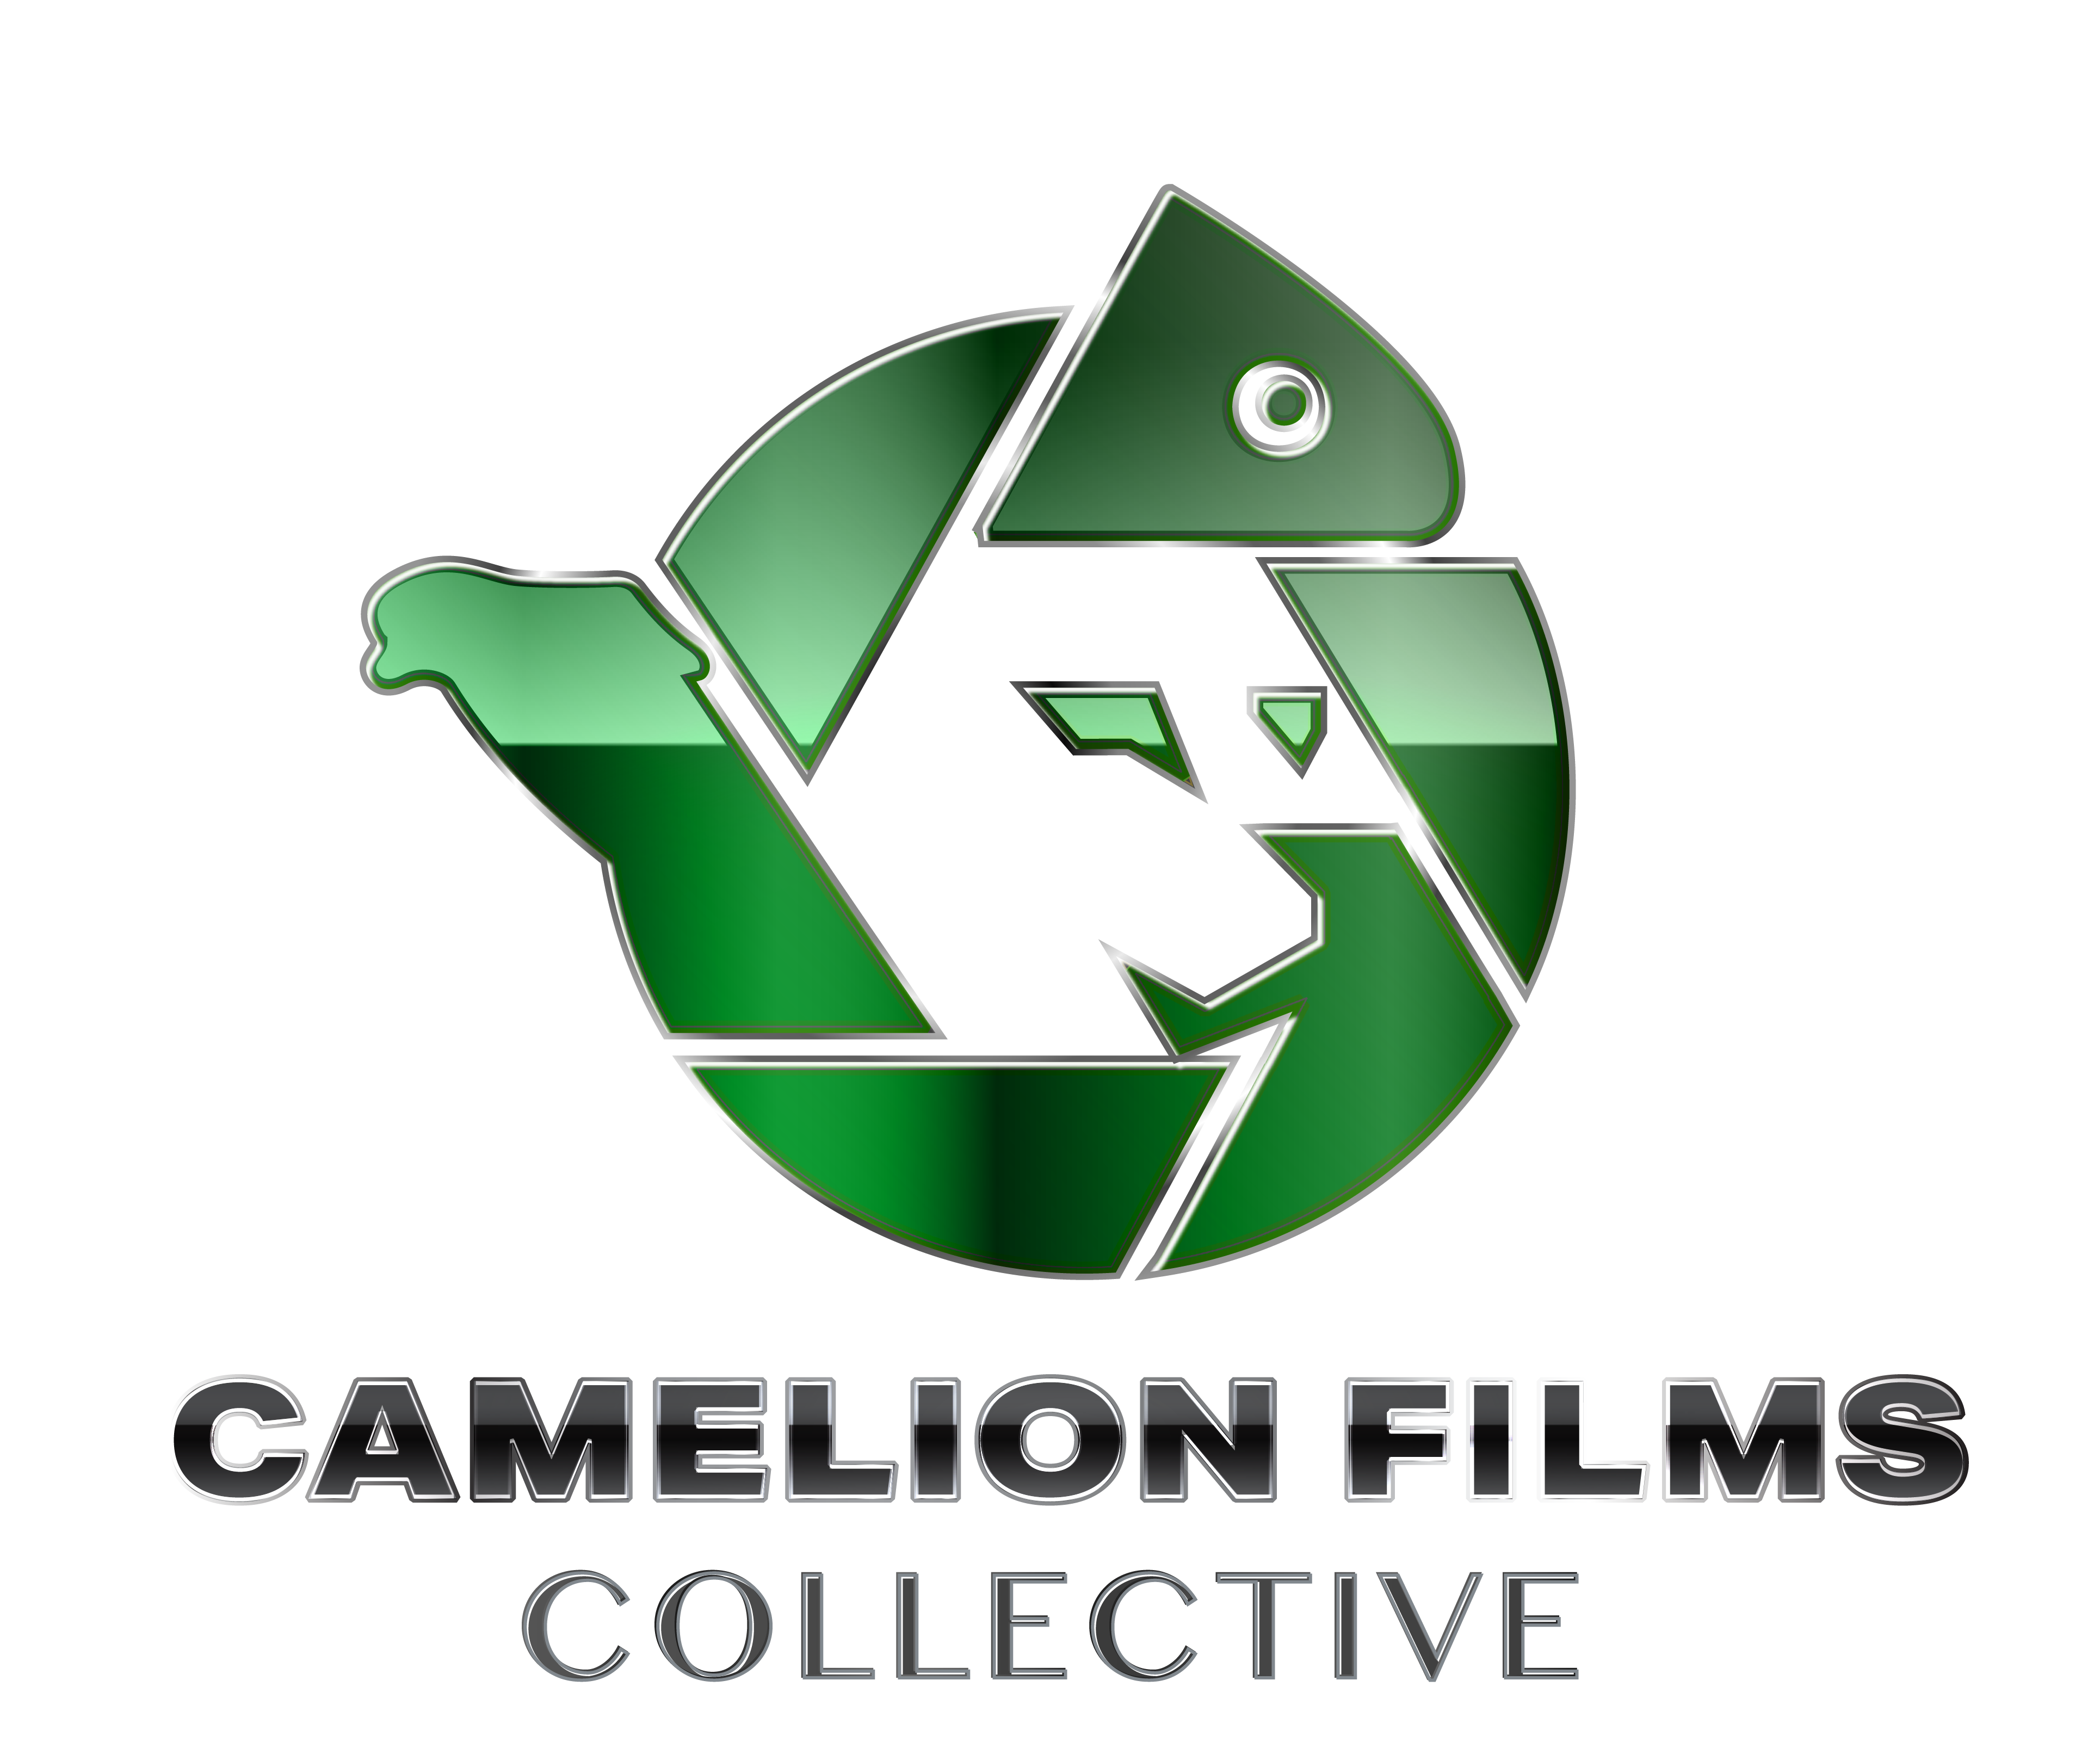 CAMELION FILMS - Filmmaker Collective based in Munich